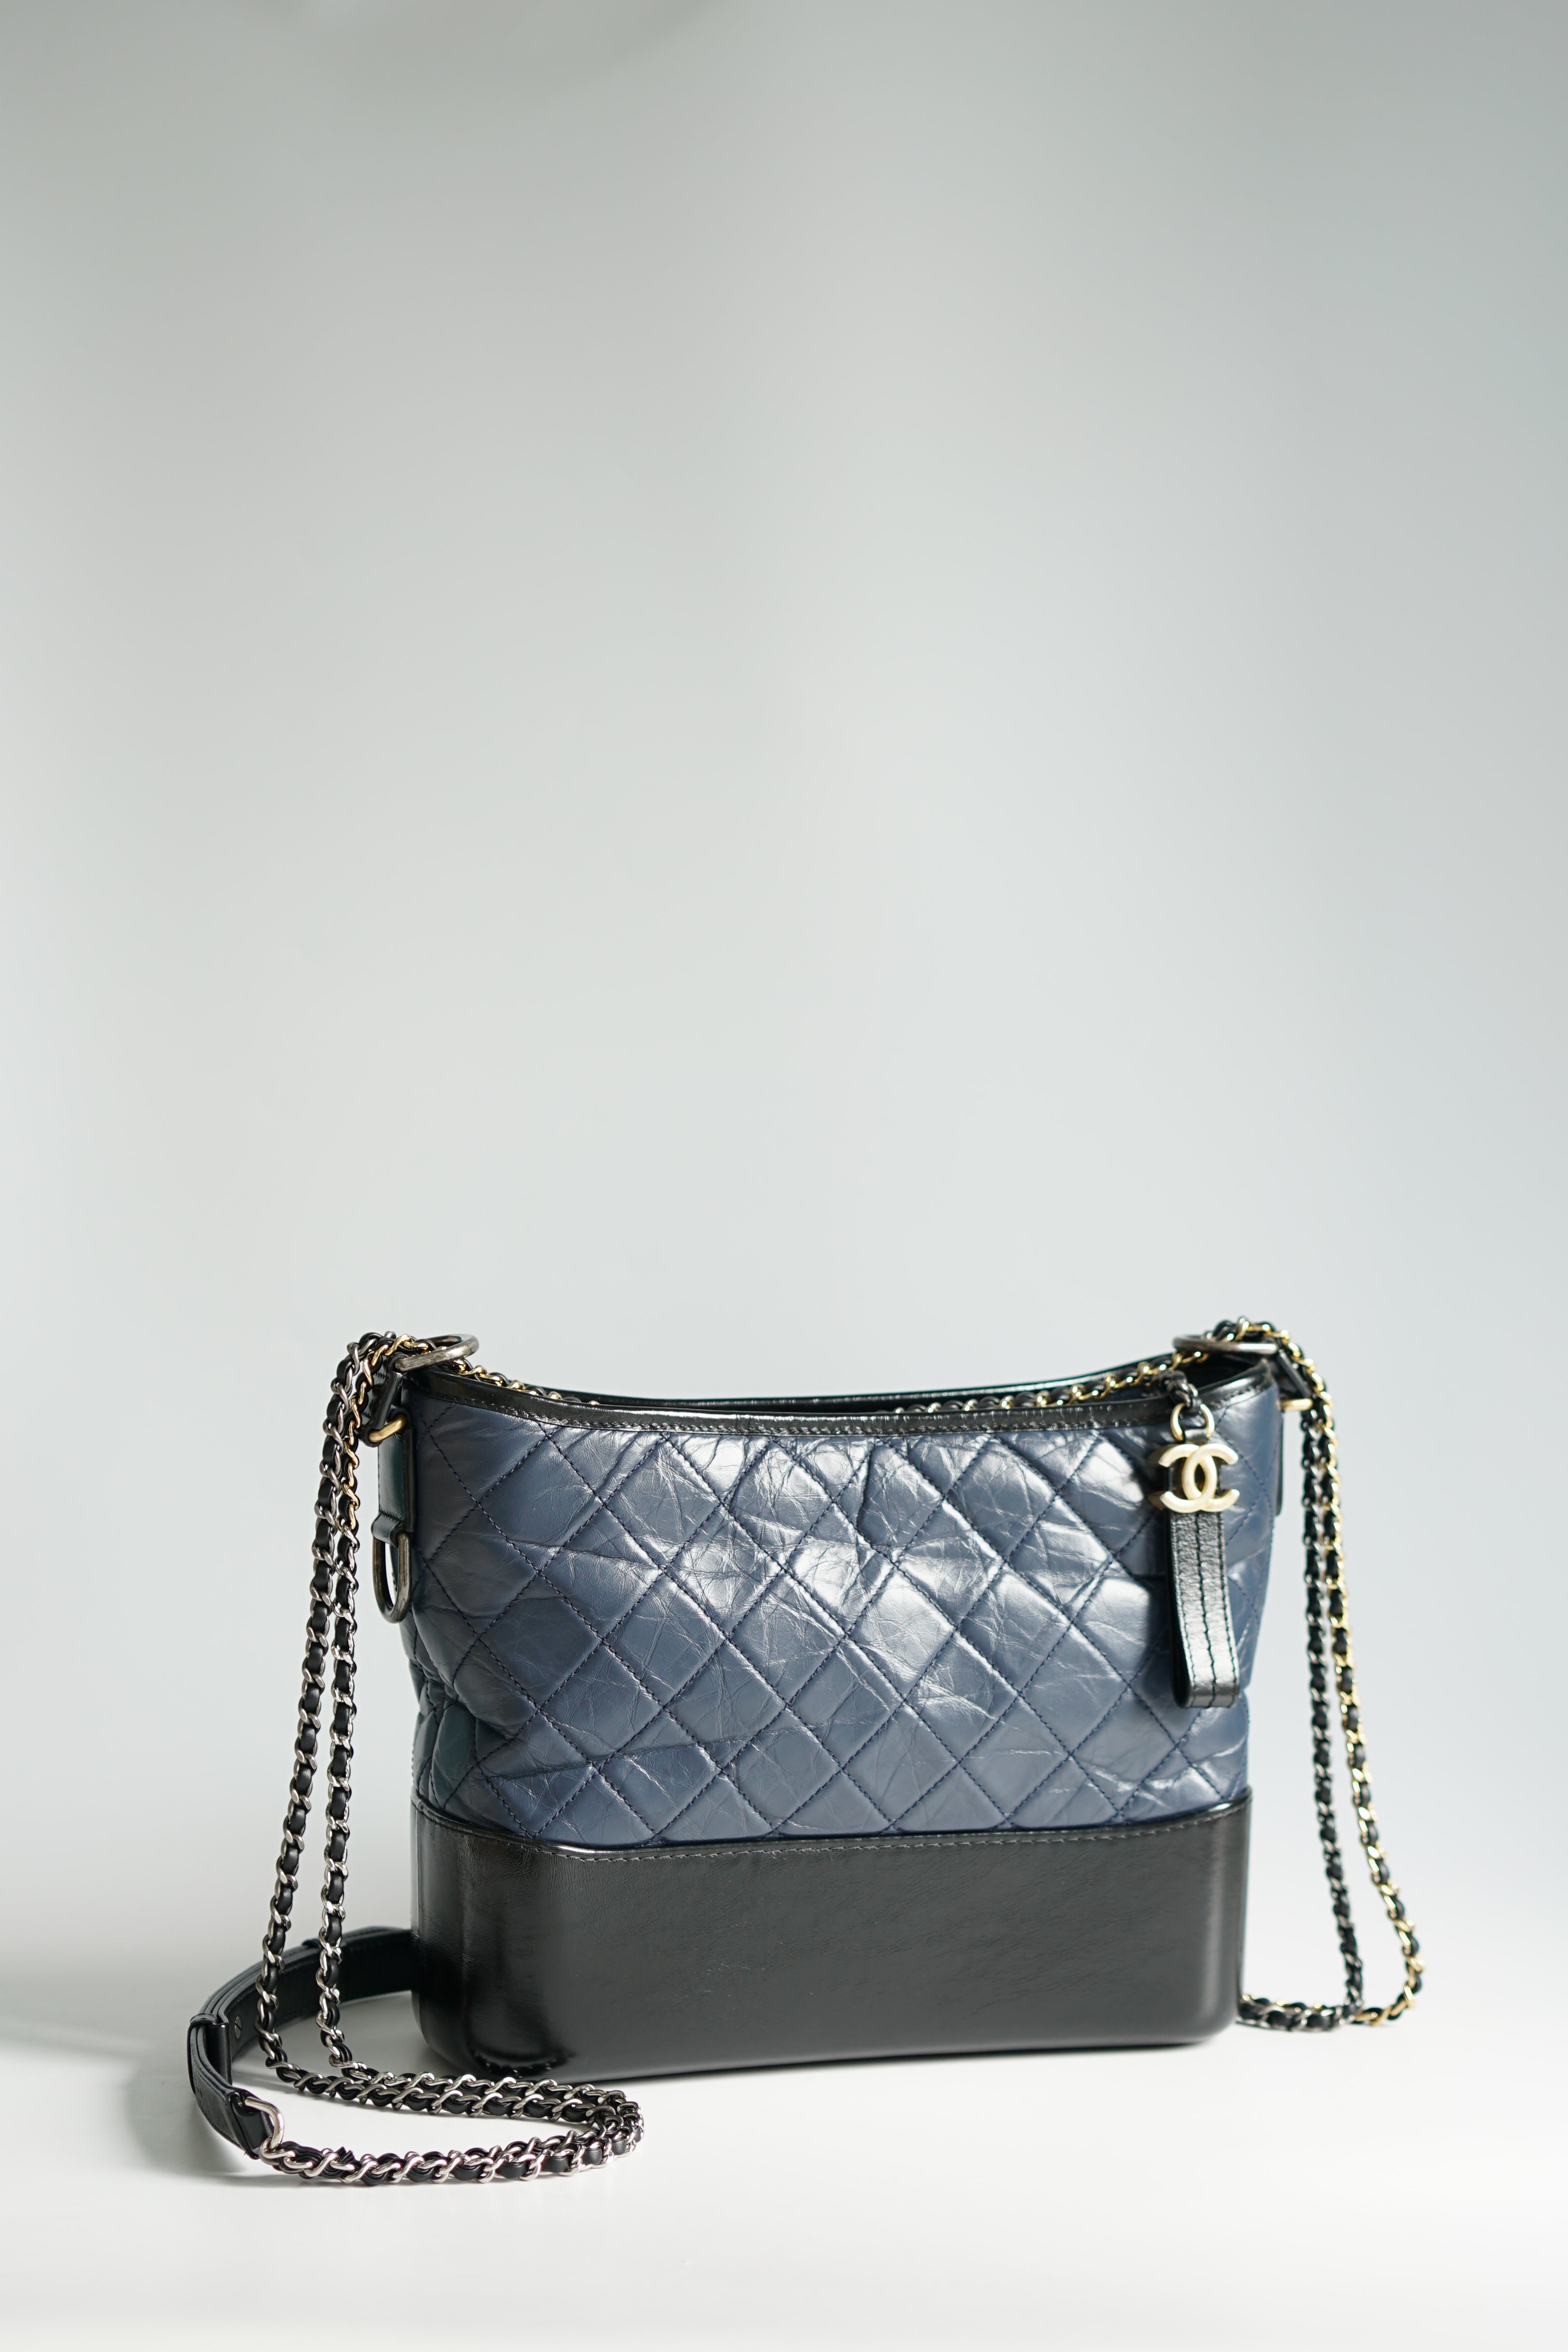 Chanel Gabrielle Medium Hobo Bag in Black Distressed